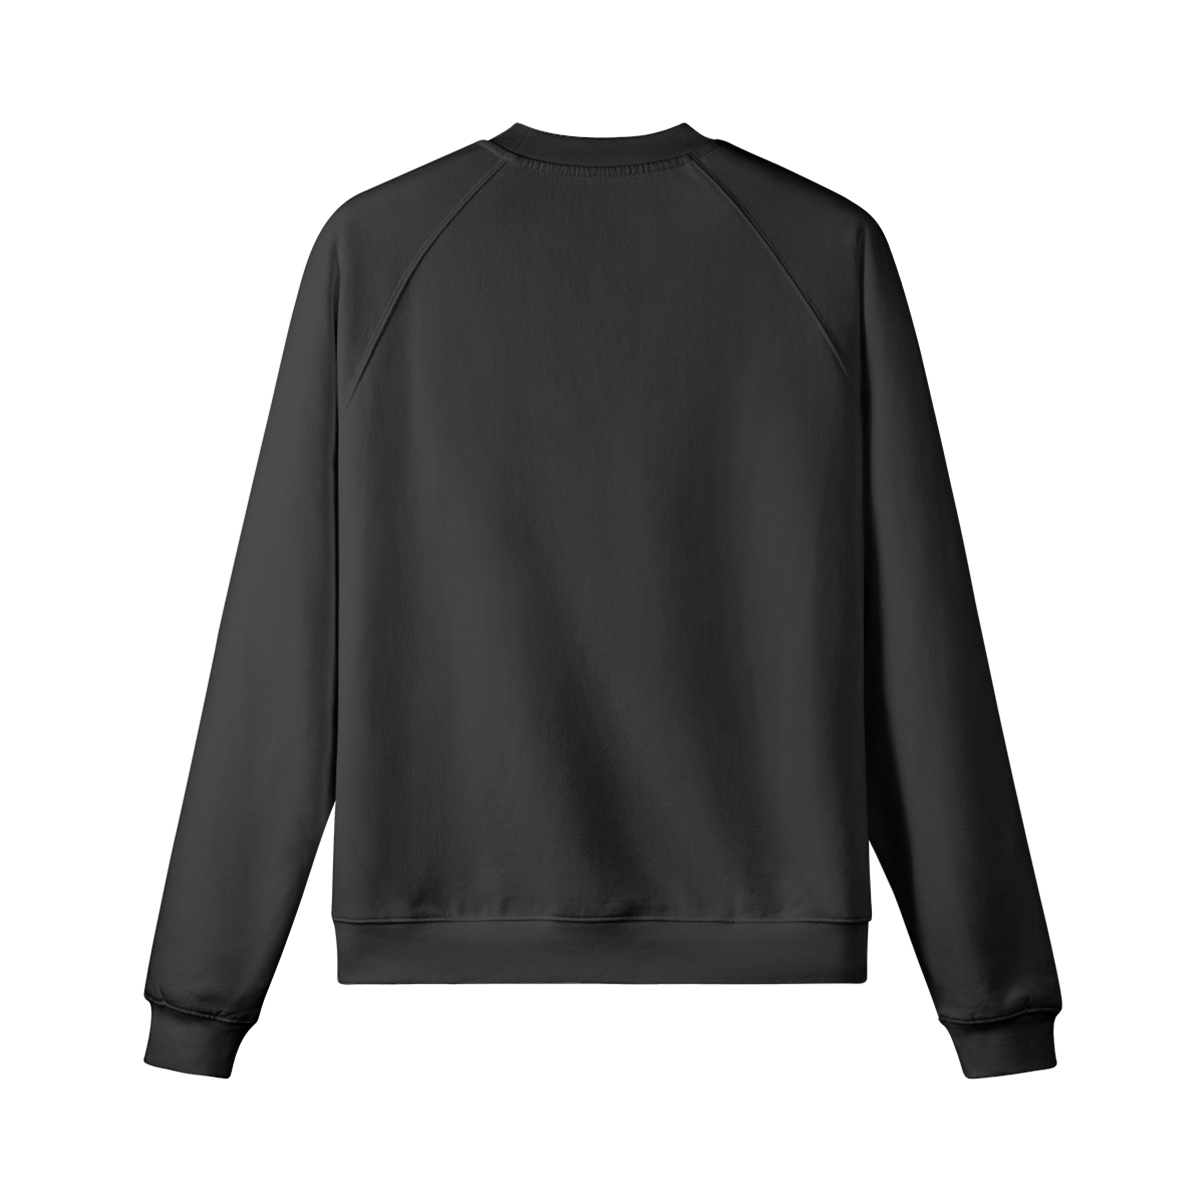 Emdawg JDM 限界を越えろ(Limit breaker) Unisex Fleece-lined Sweatshirt